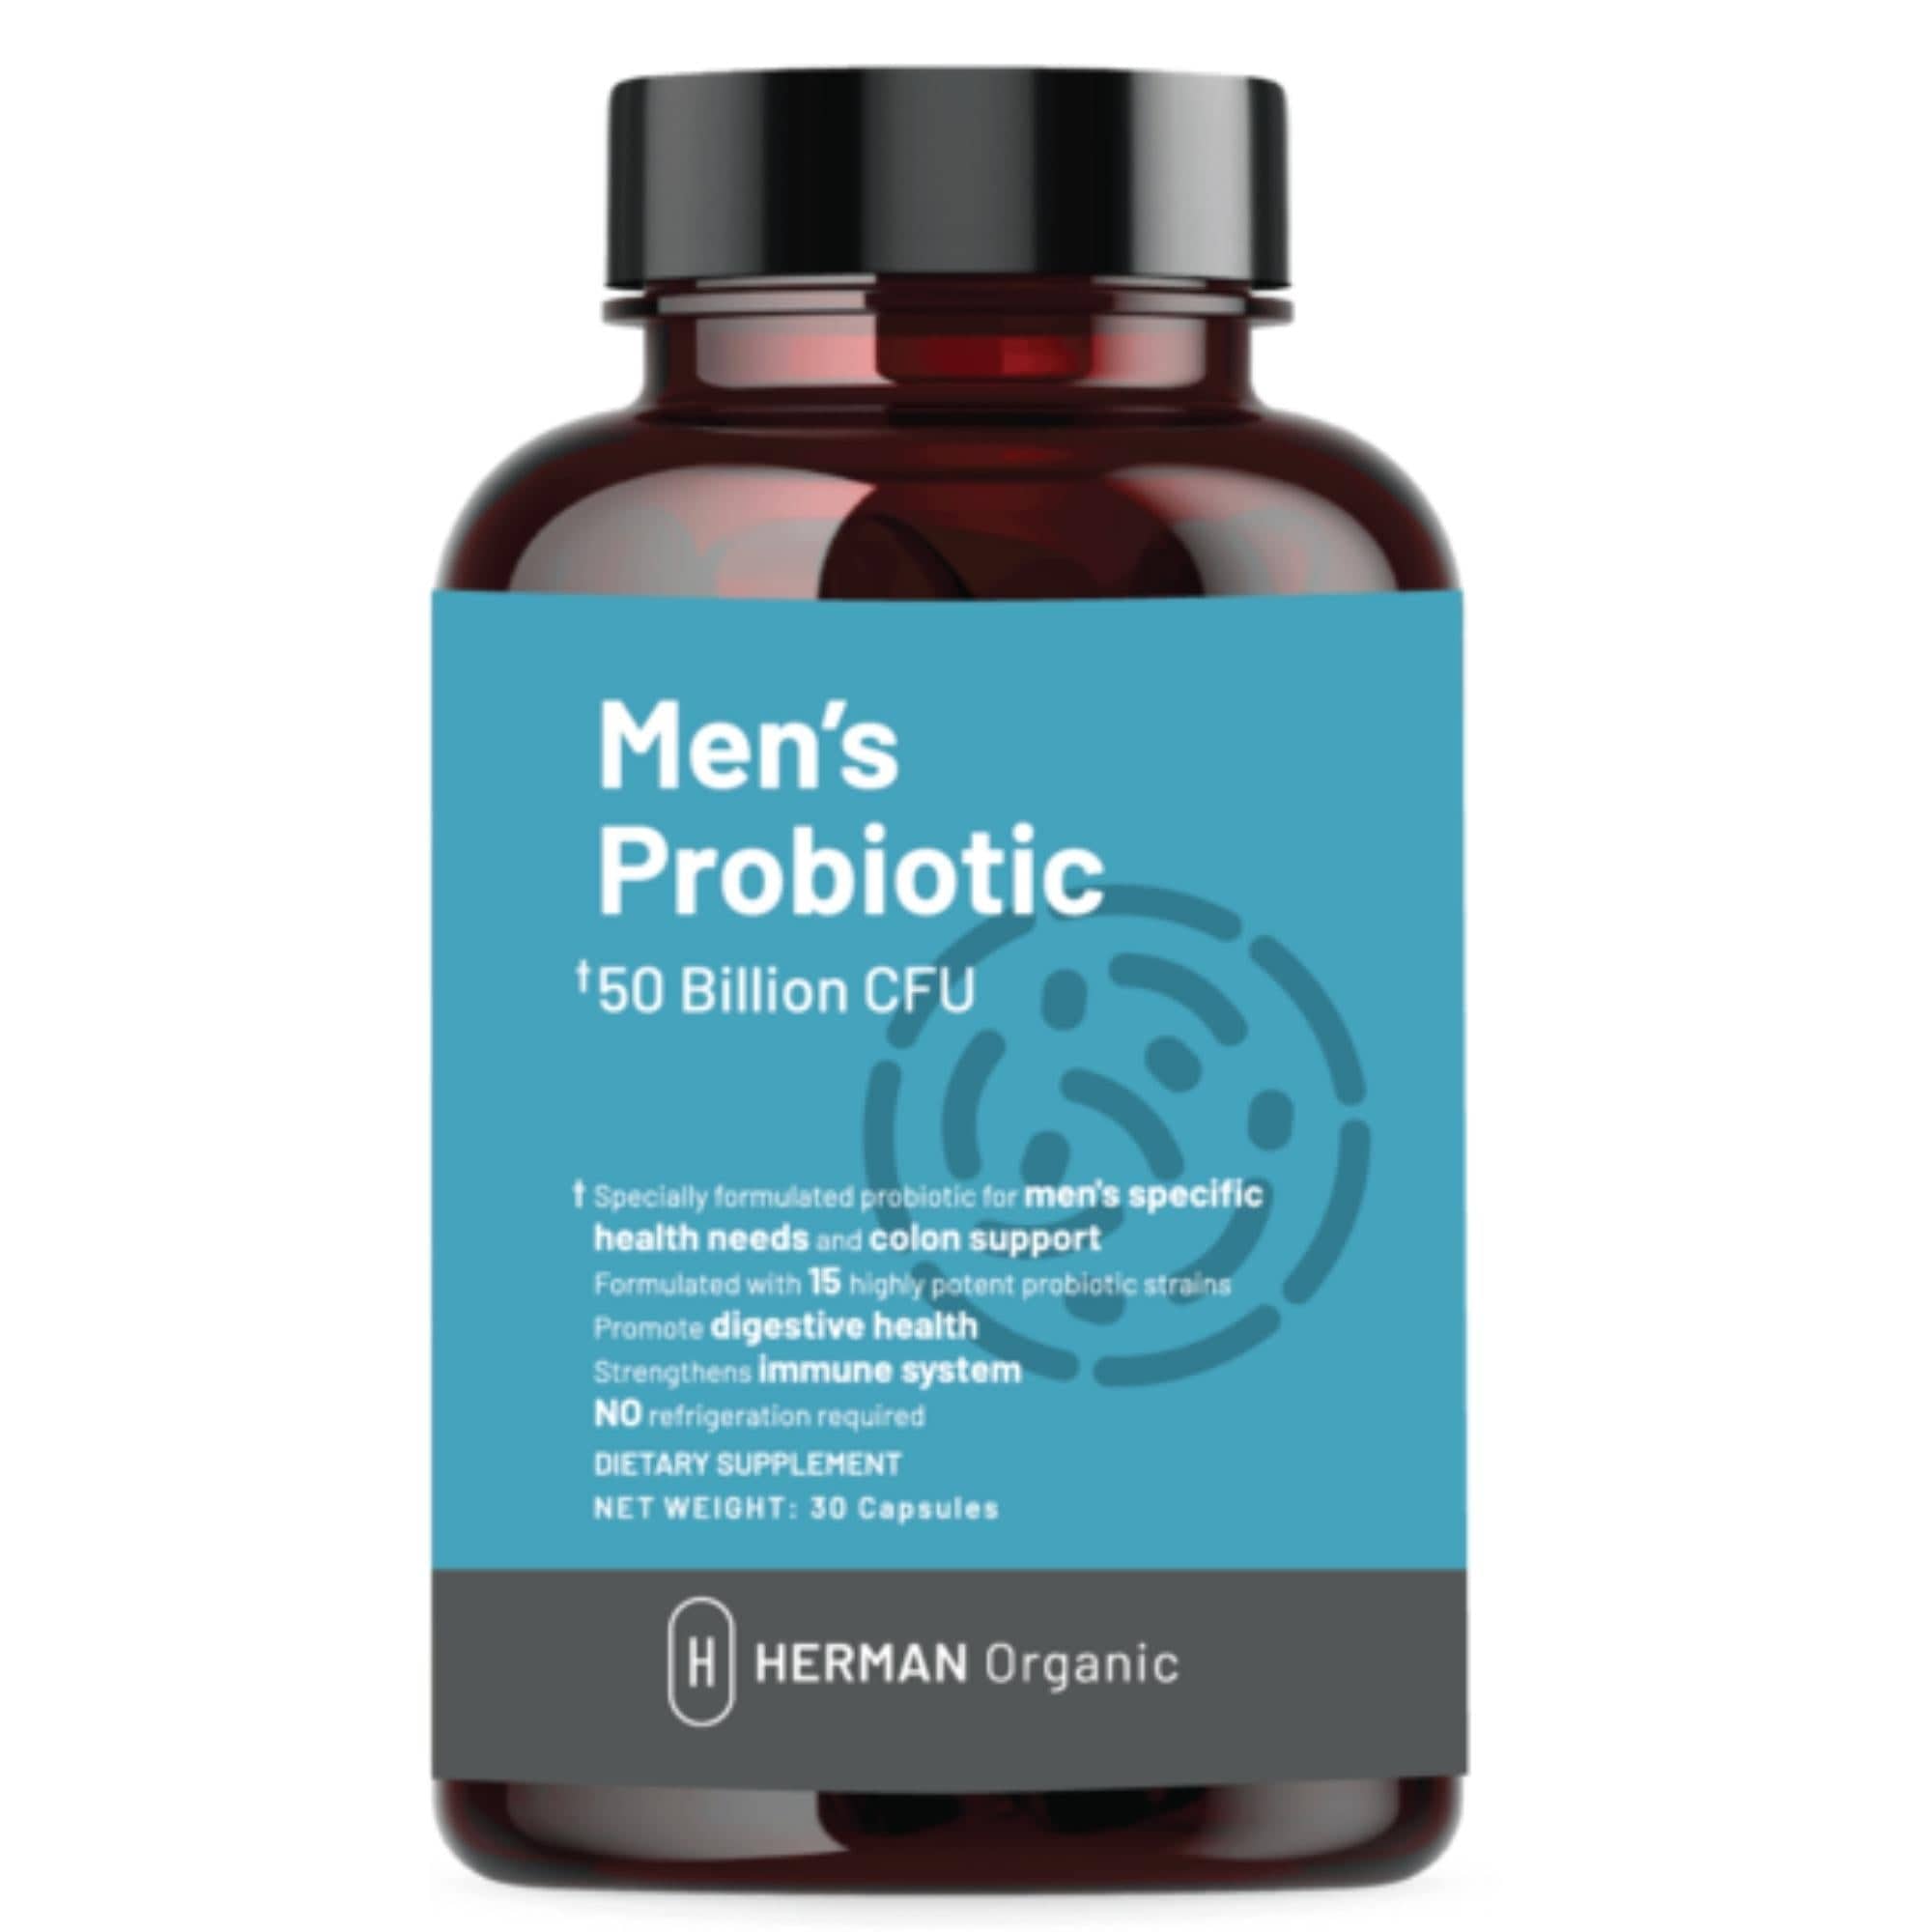 Herman Organic Vitamins & Supplements Herman Organic Men’s Probiotic